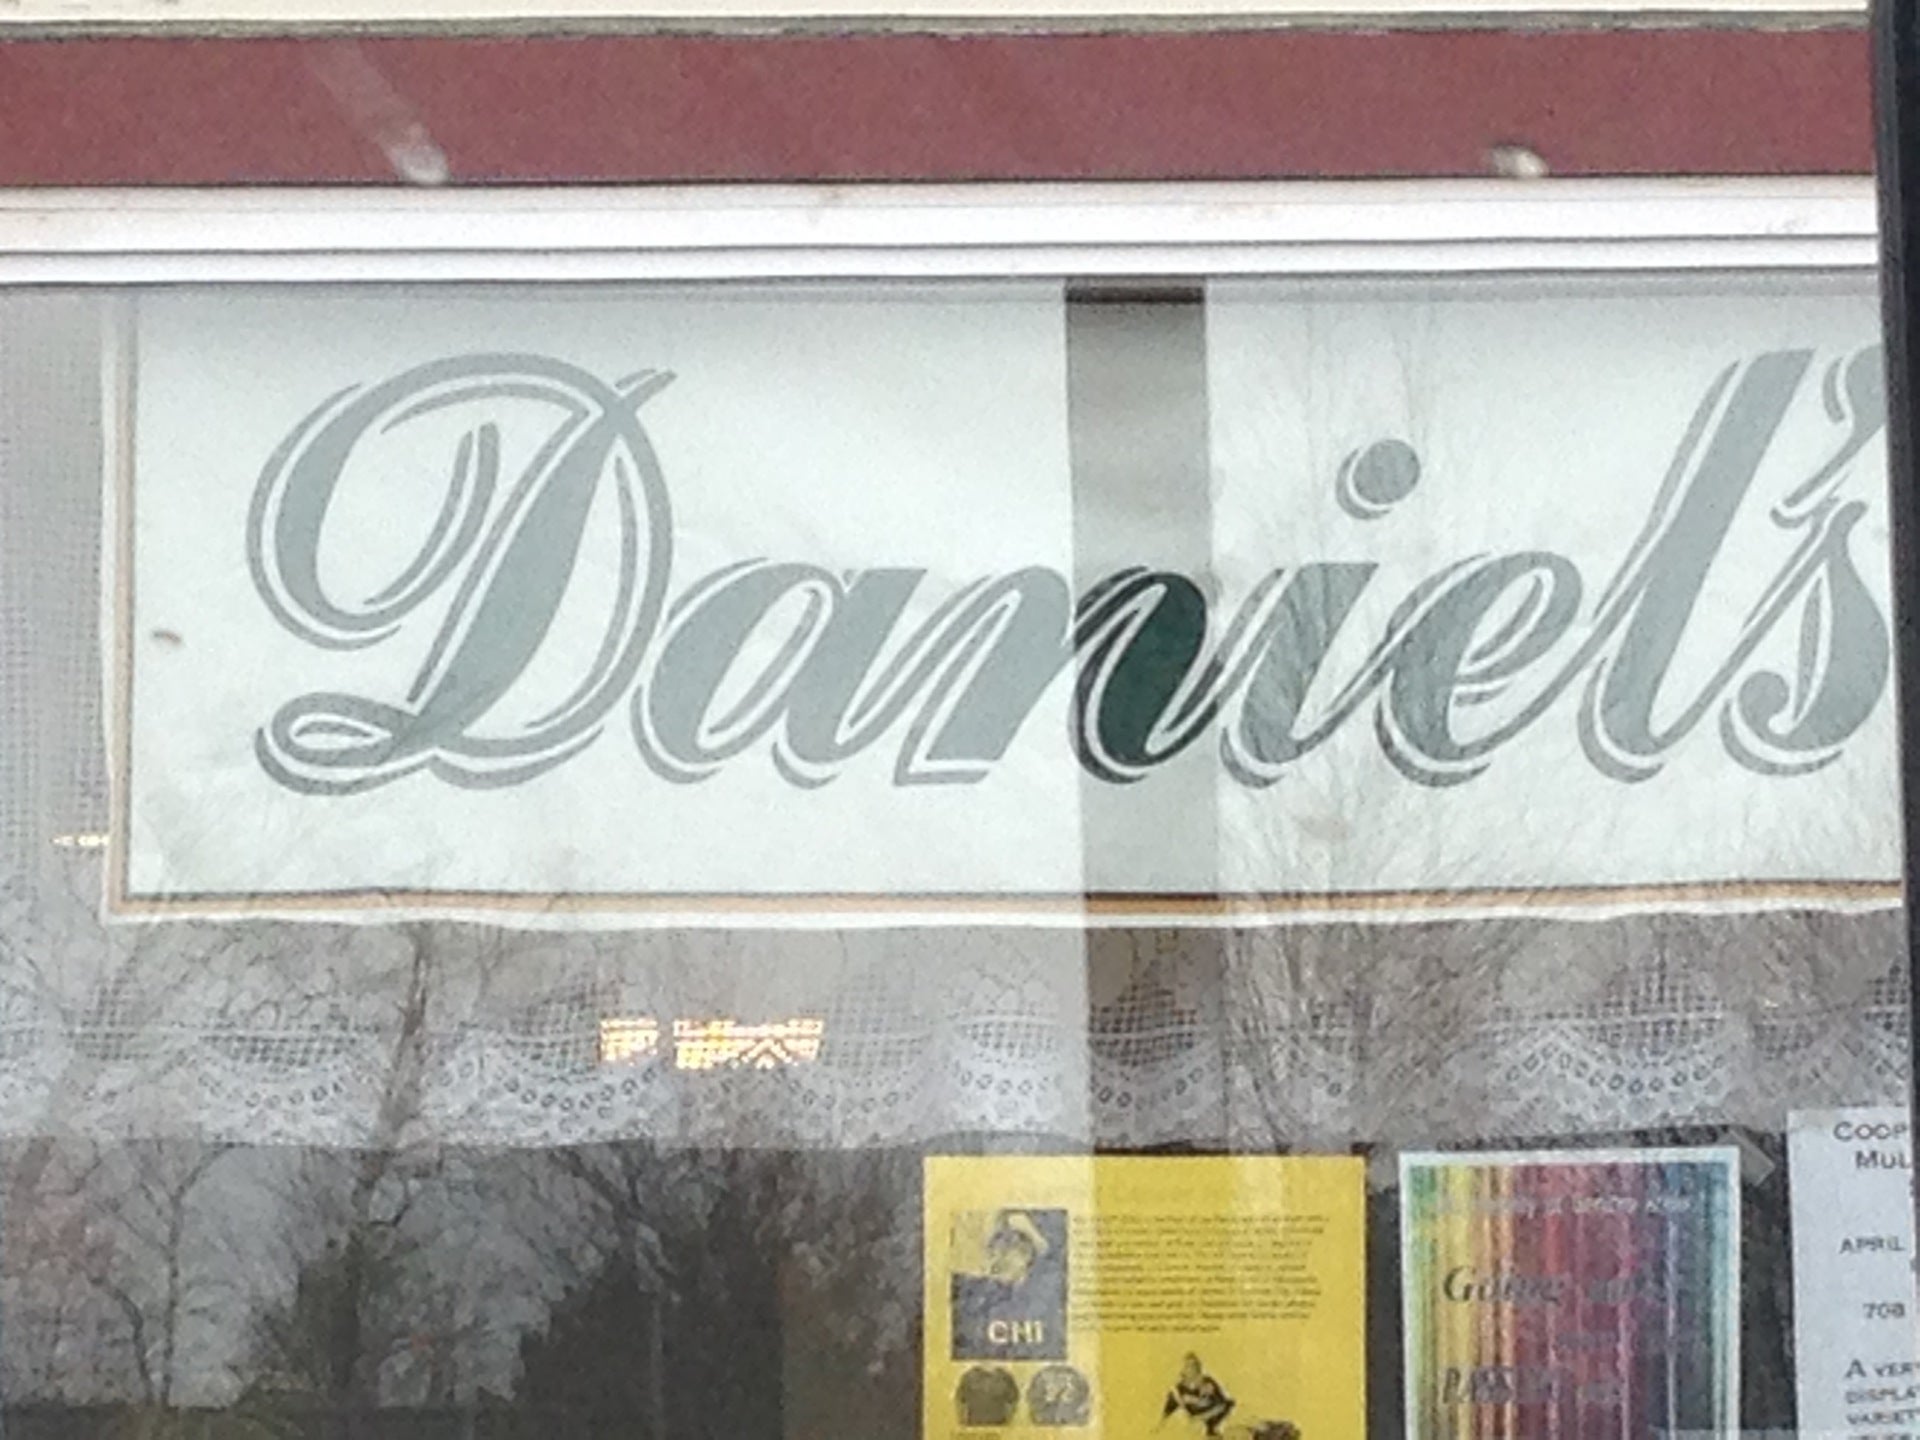 Daniels Beauty Salon 323 Main St, Coopersville Michigan 49404